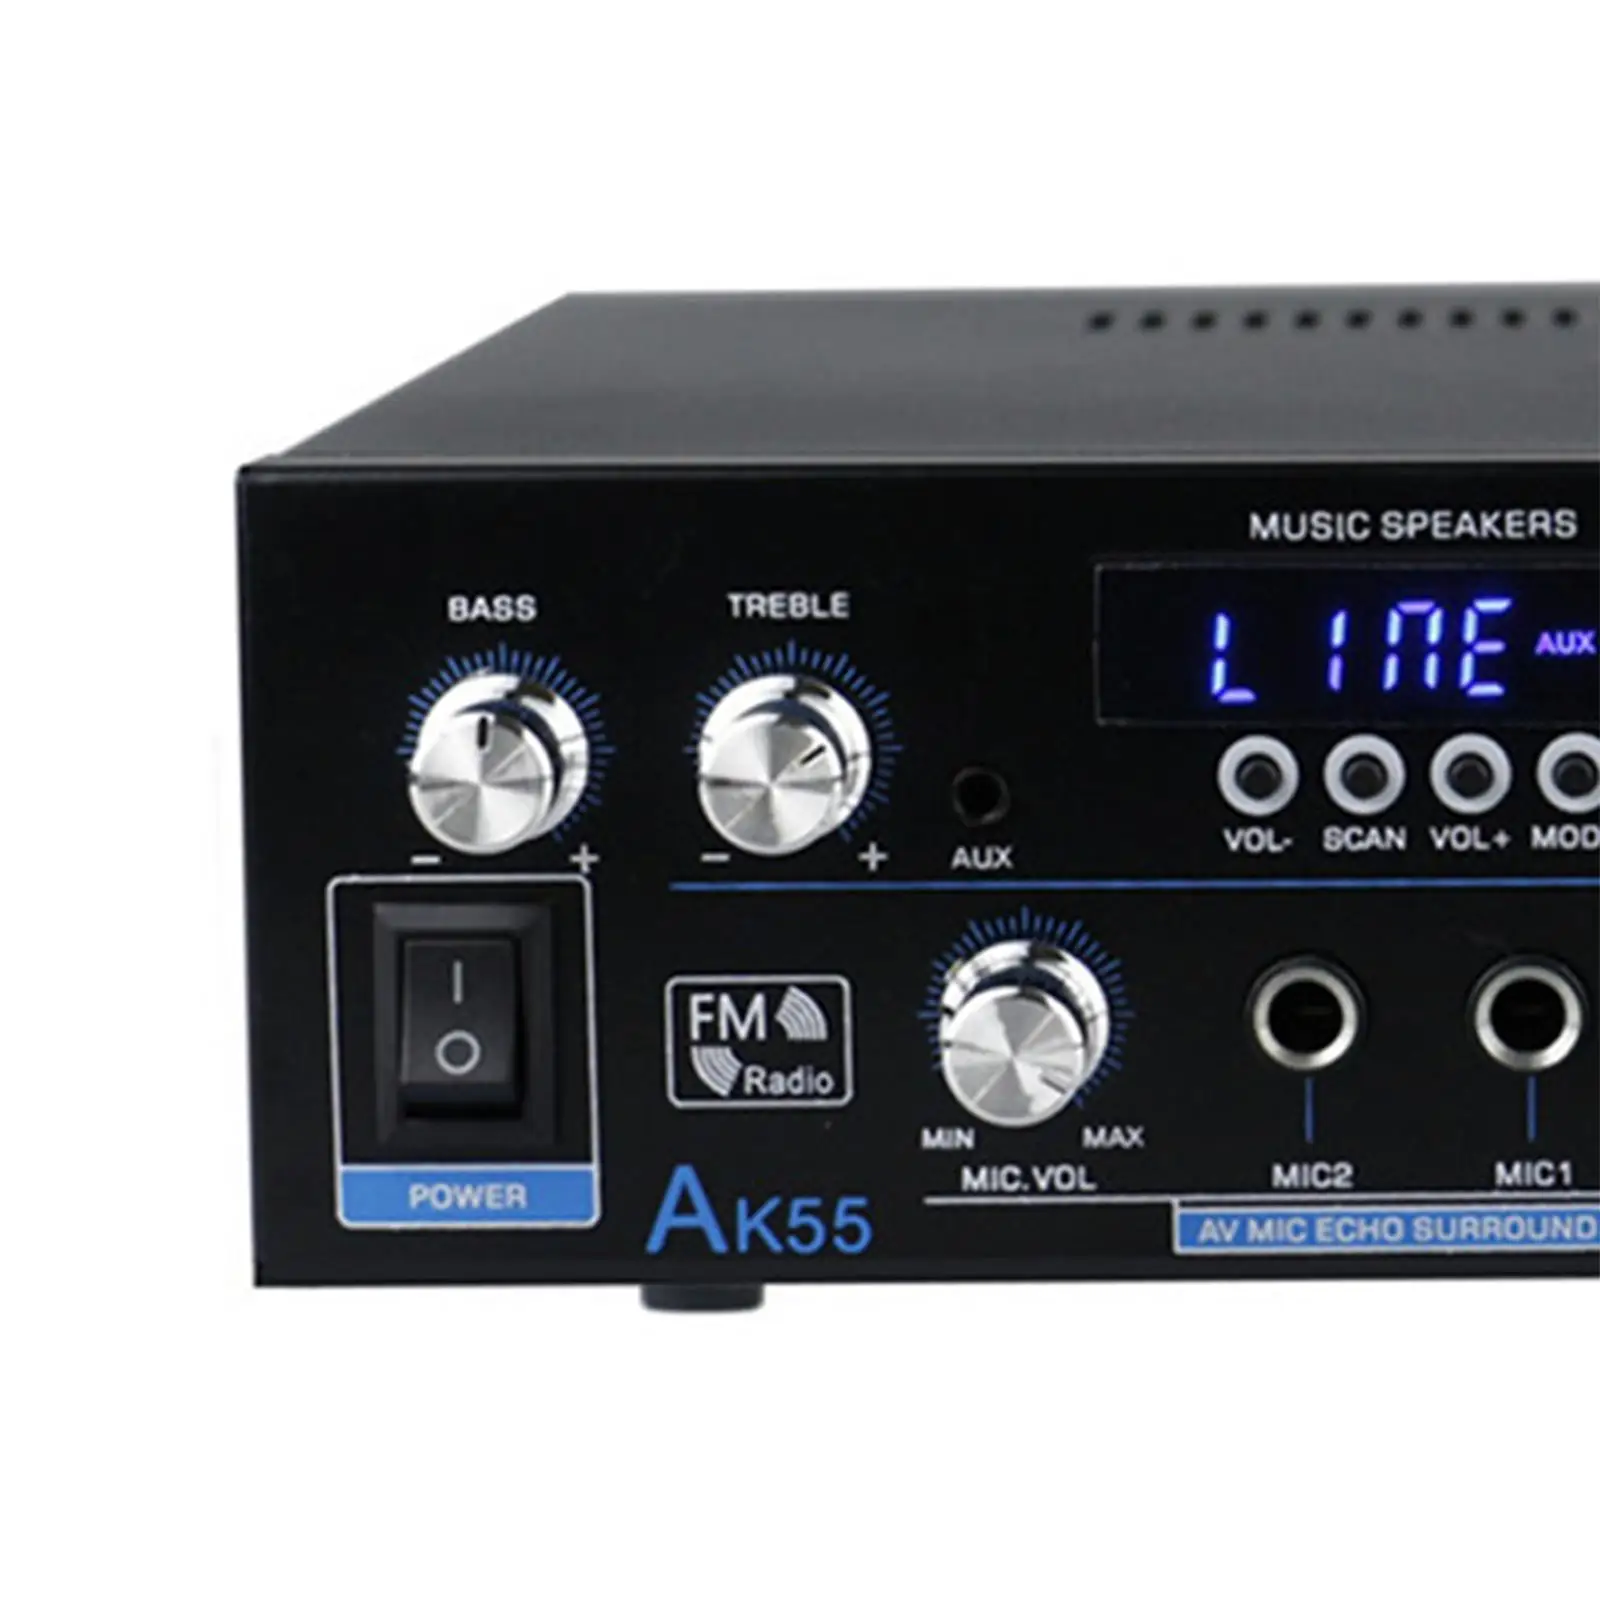 Audio Power Amplifier 70W+70W Dual Channel for Car Home Bar Party 110-240V Portable Sound Amplifier Speaker Amplifier European